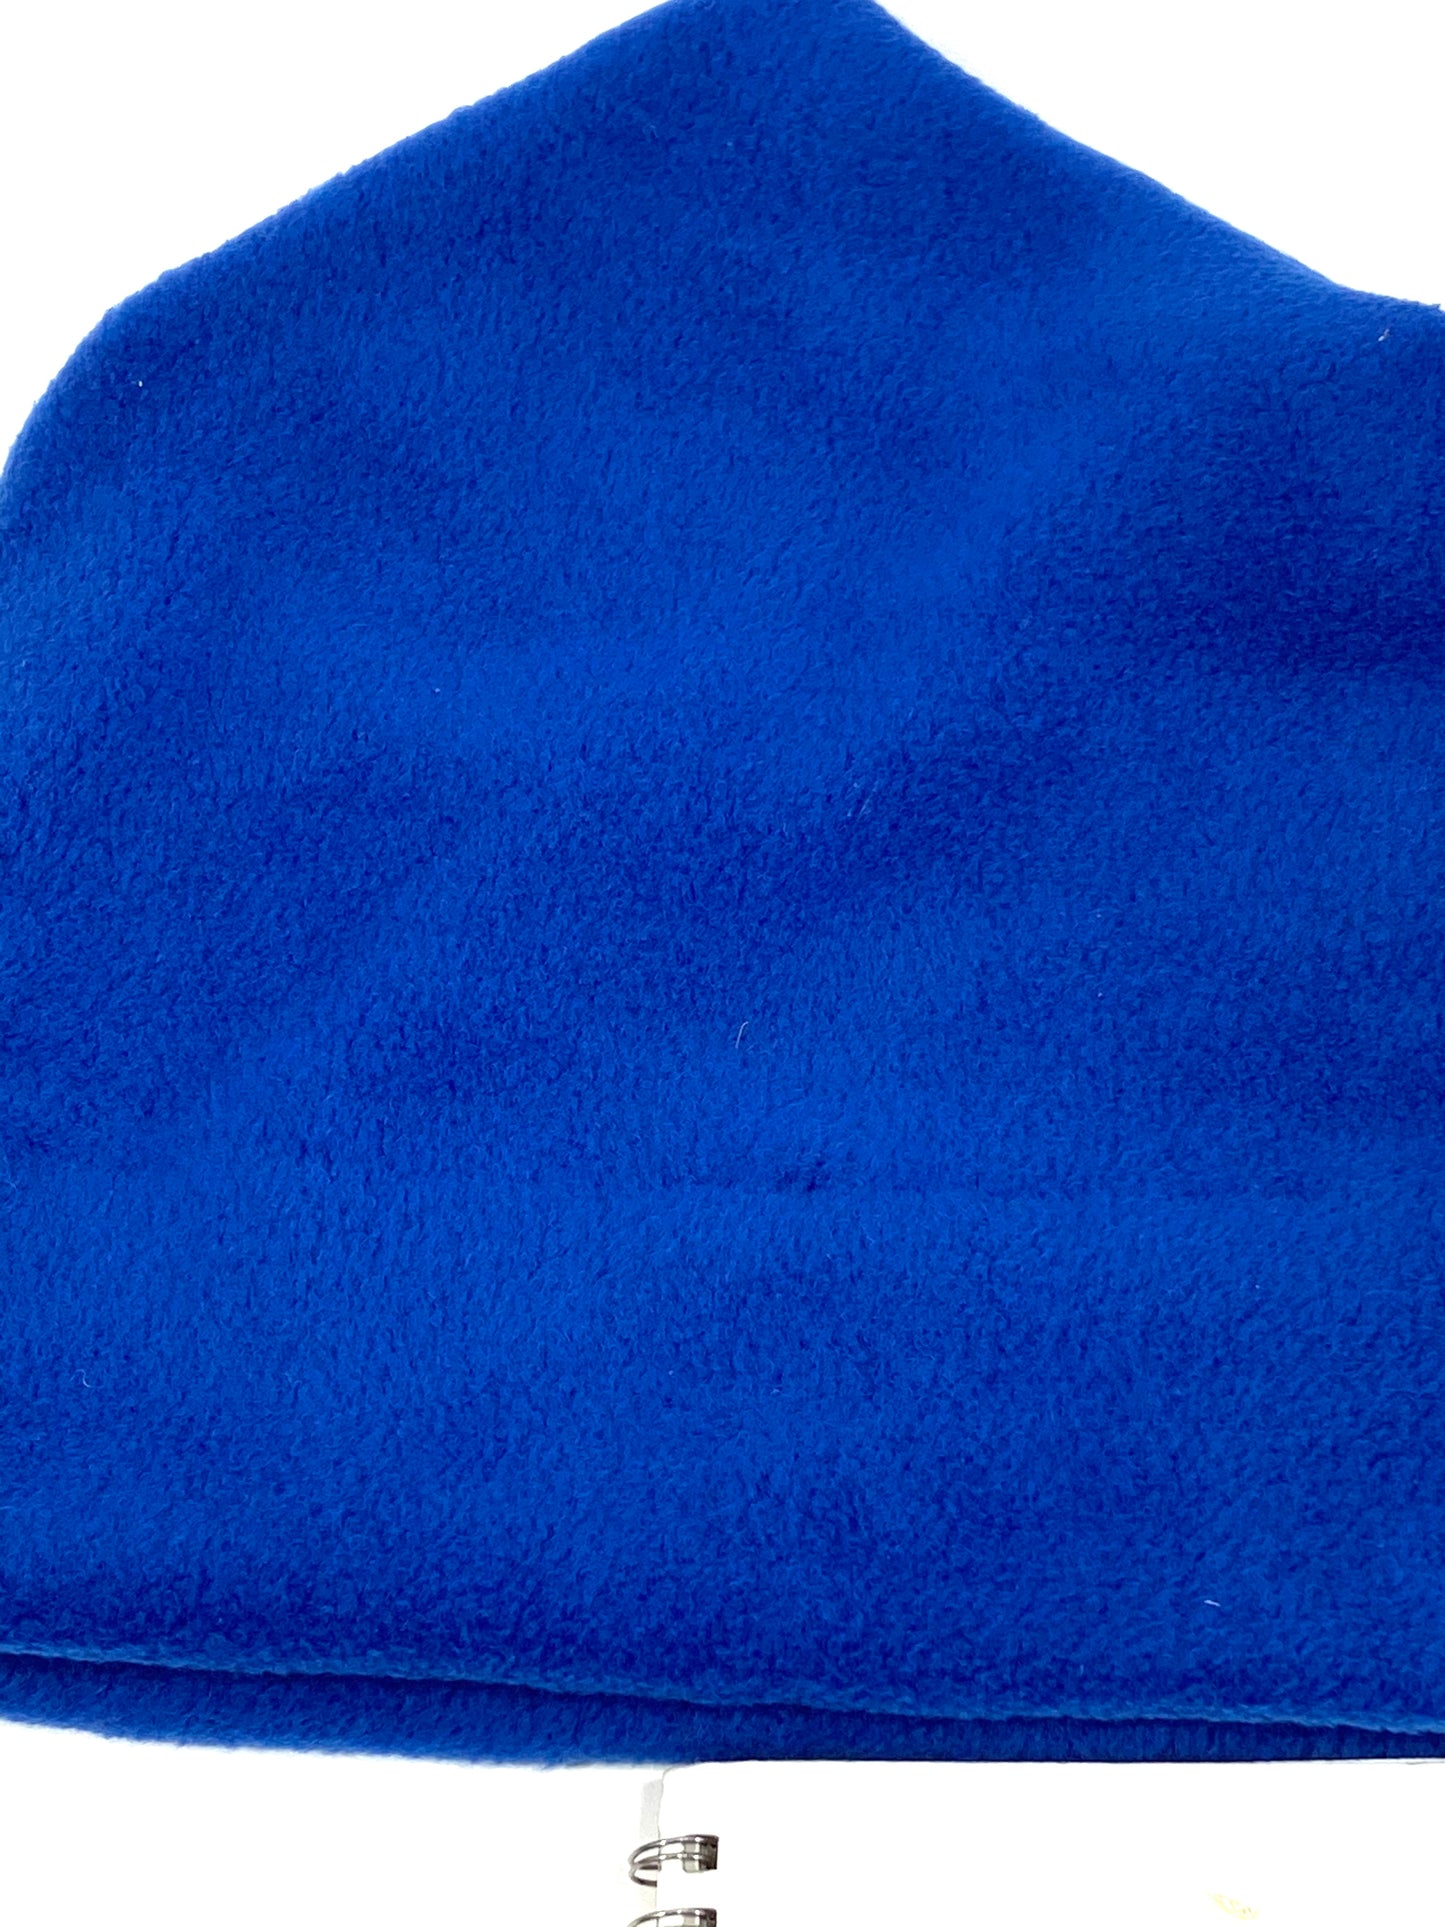 Detroit Lions Vintage NFL Blue "Tall" Cuffless Fleece Hat by Drew Pearson Marketing